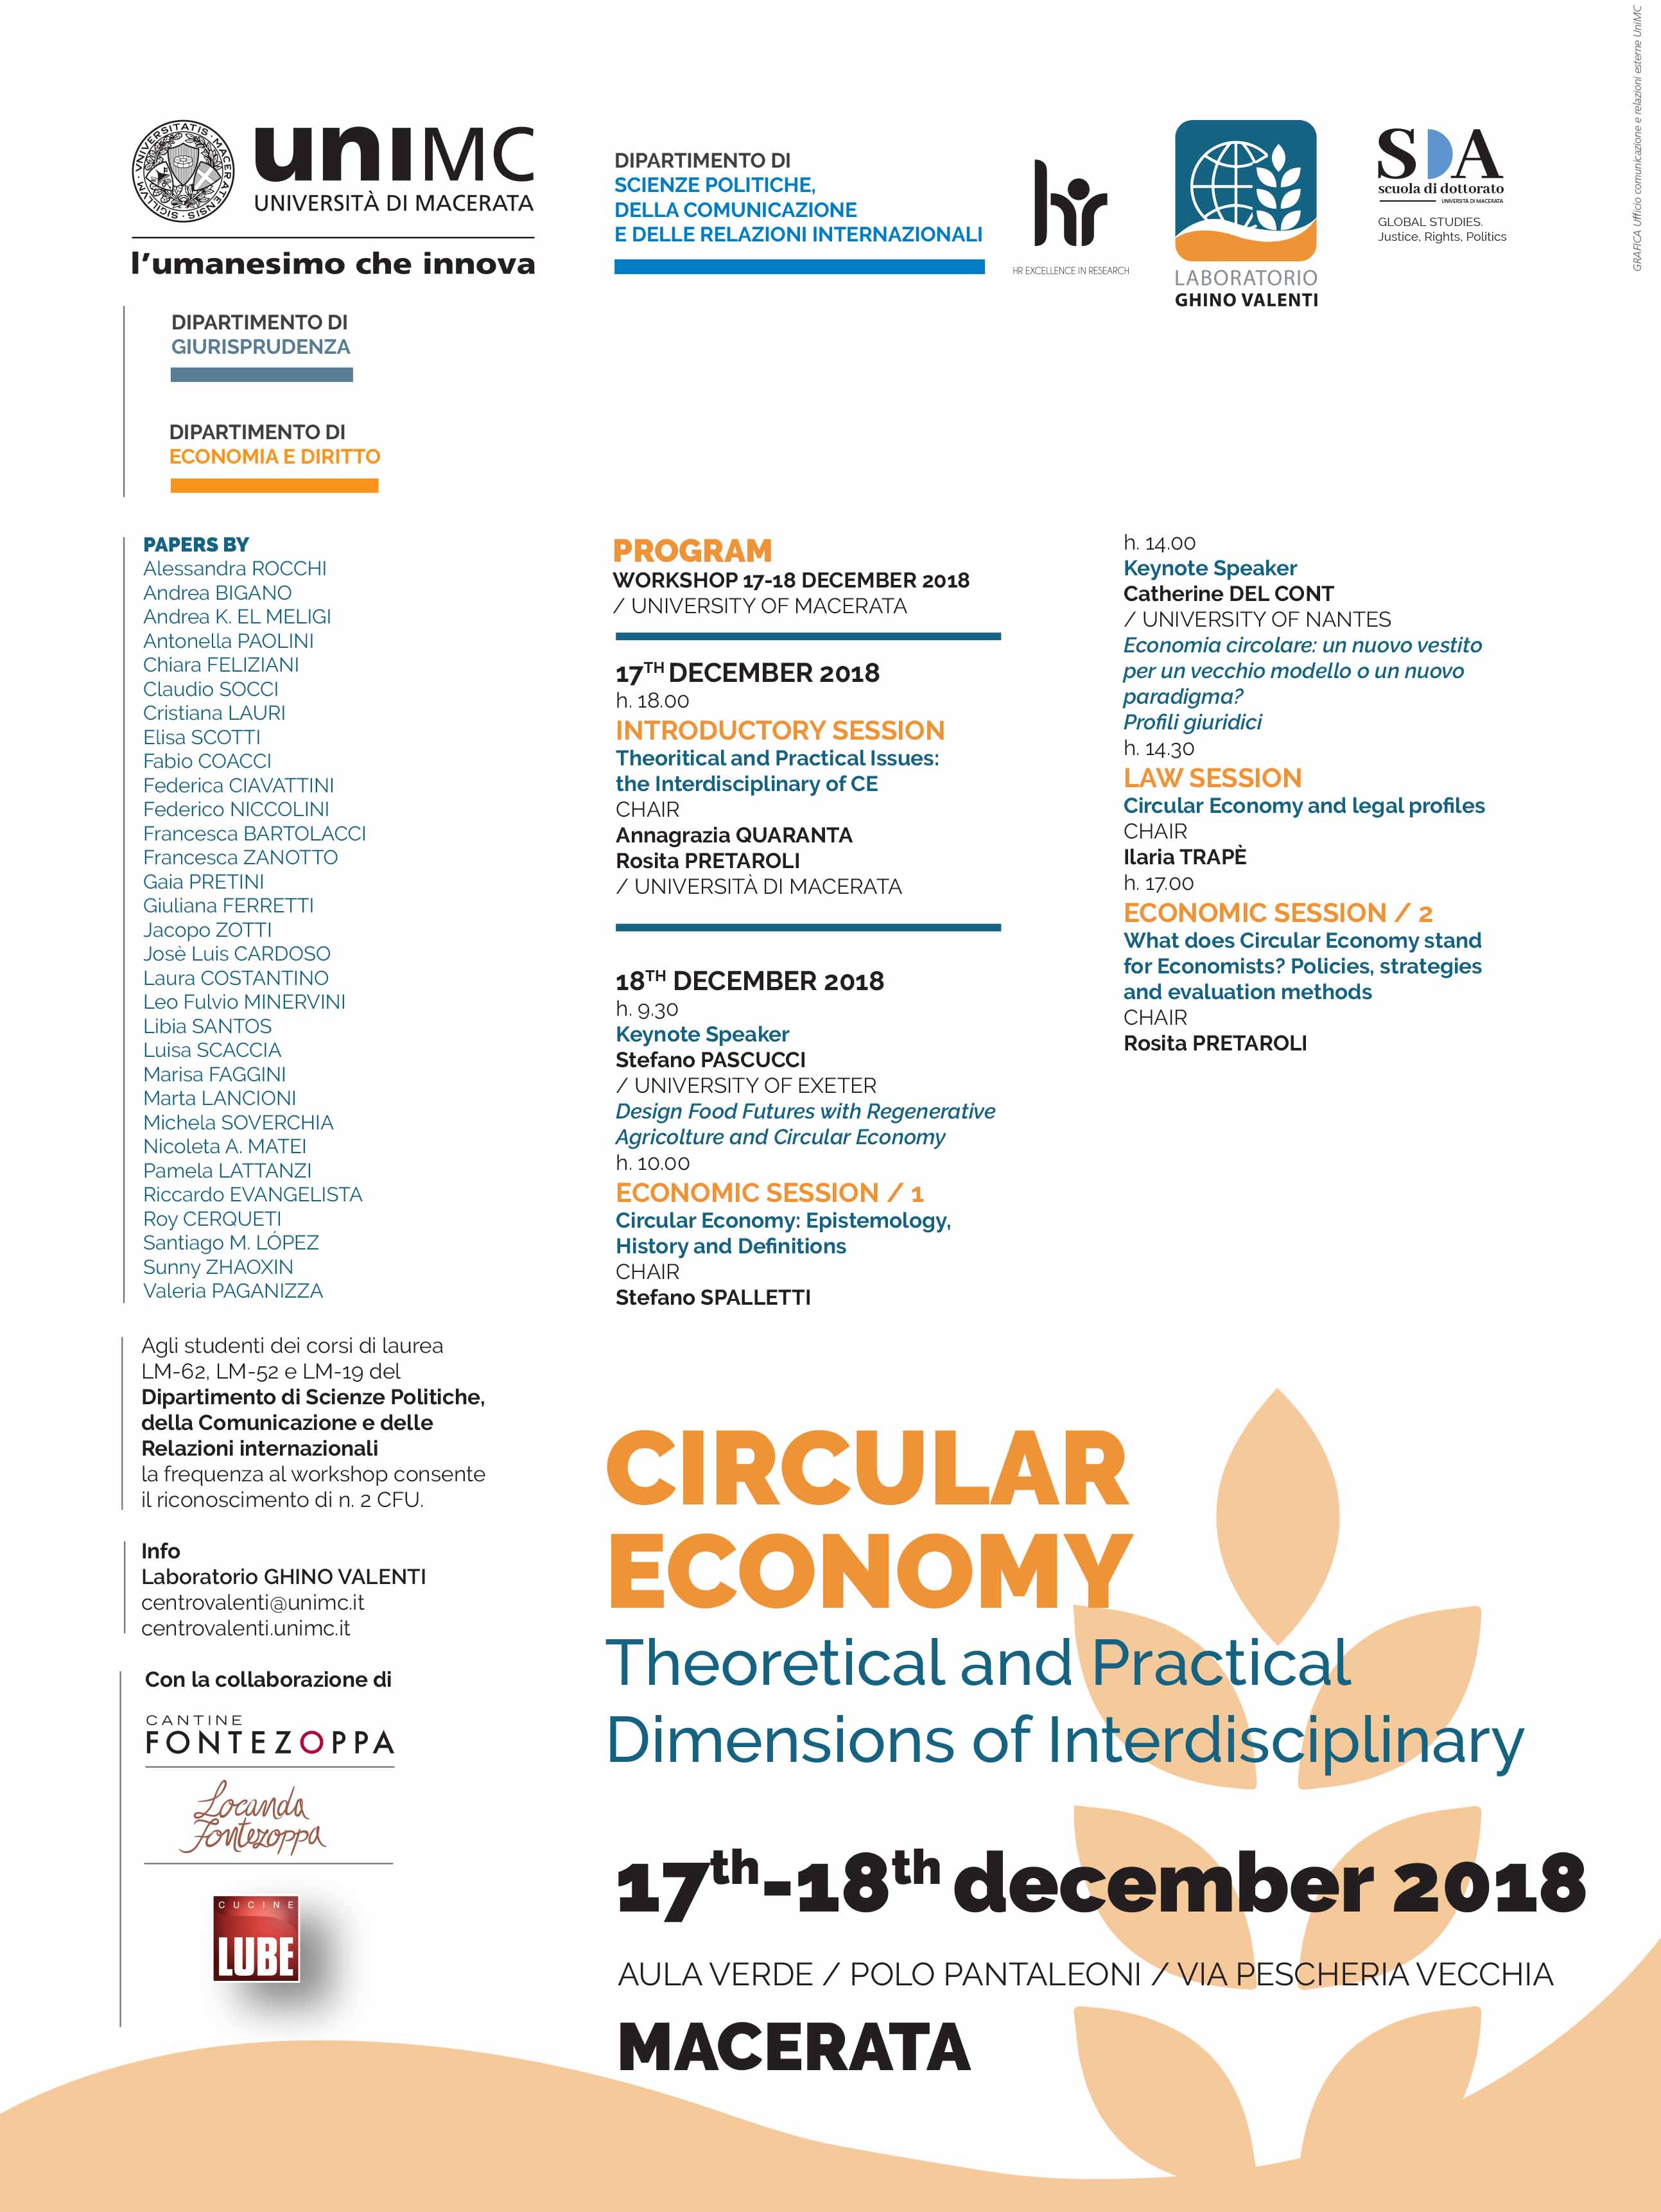 SEMINARS | "Circular Economy. Theoretical and Practical Dimensions of Interdisciplinarity"